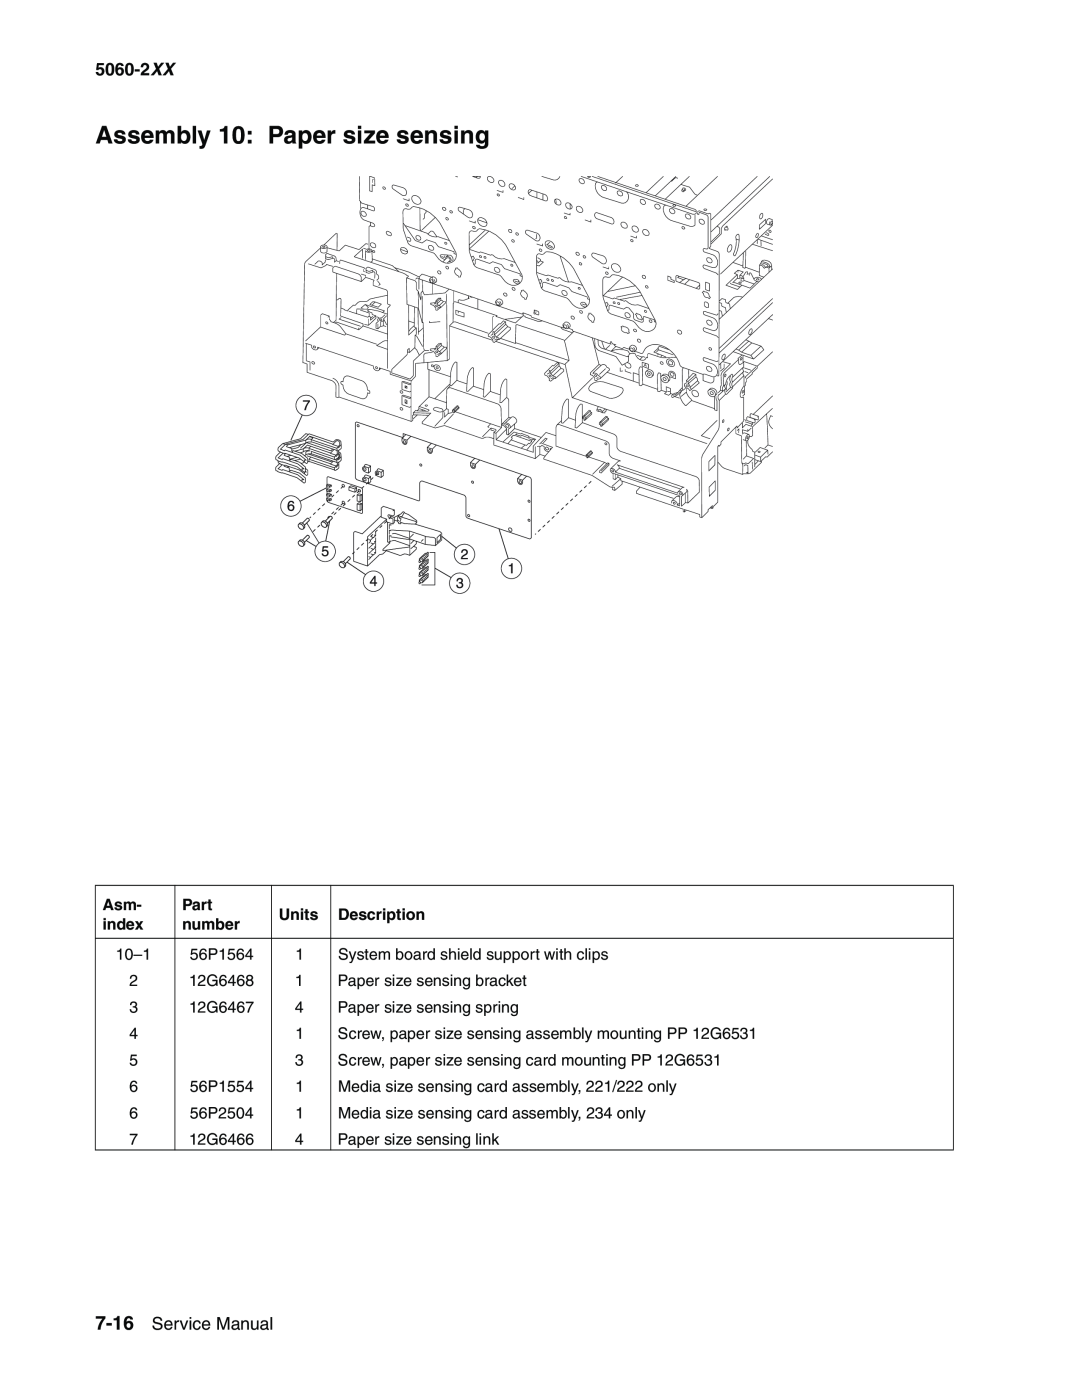 Lexmark 5060-2XX manual Assembly 10 Paper size sensing, Service Manual, Part, Units, Description, index, number 